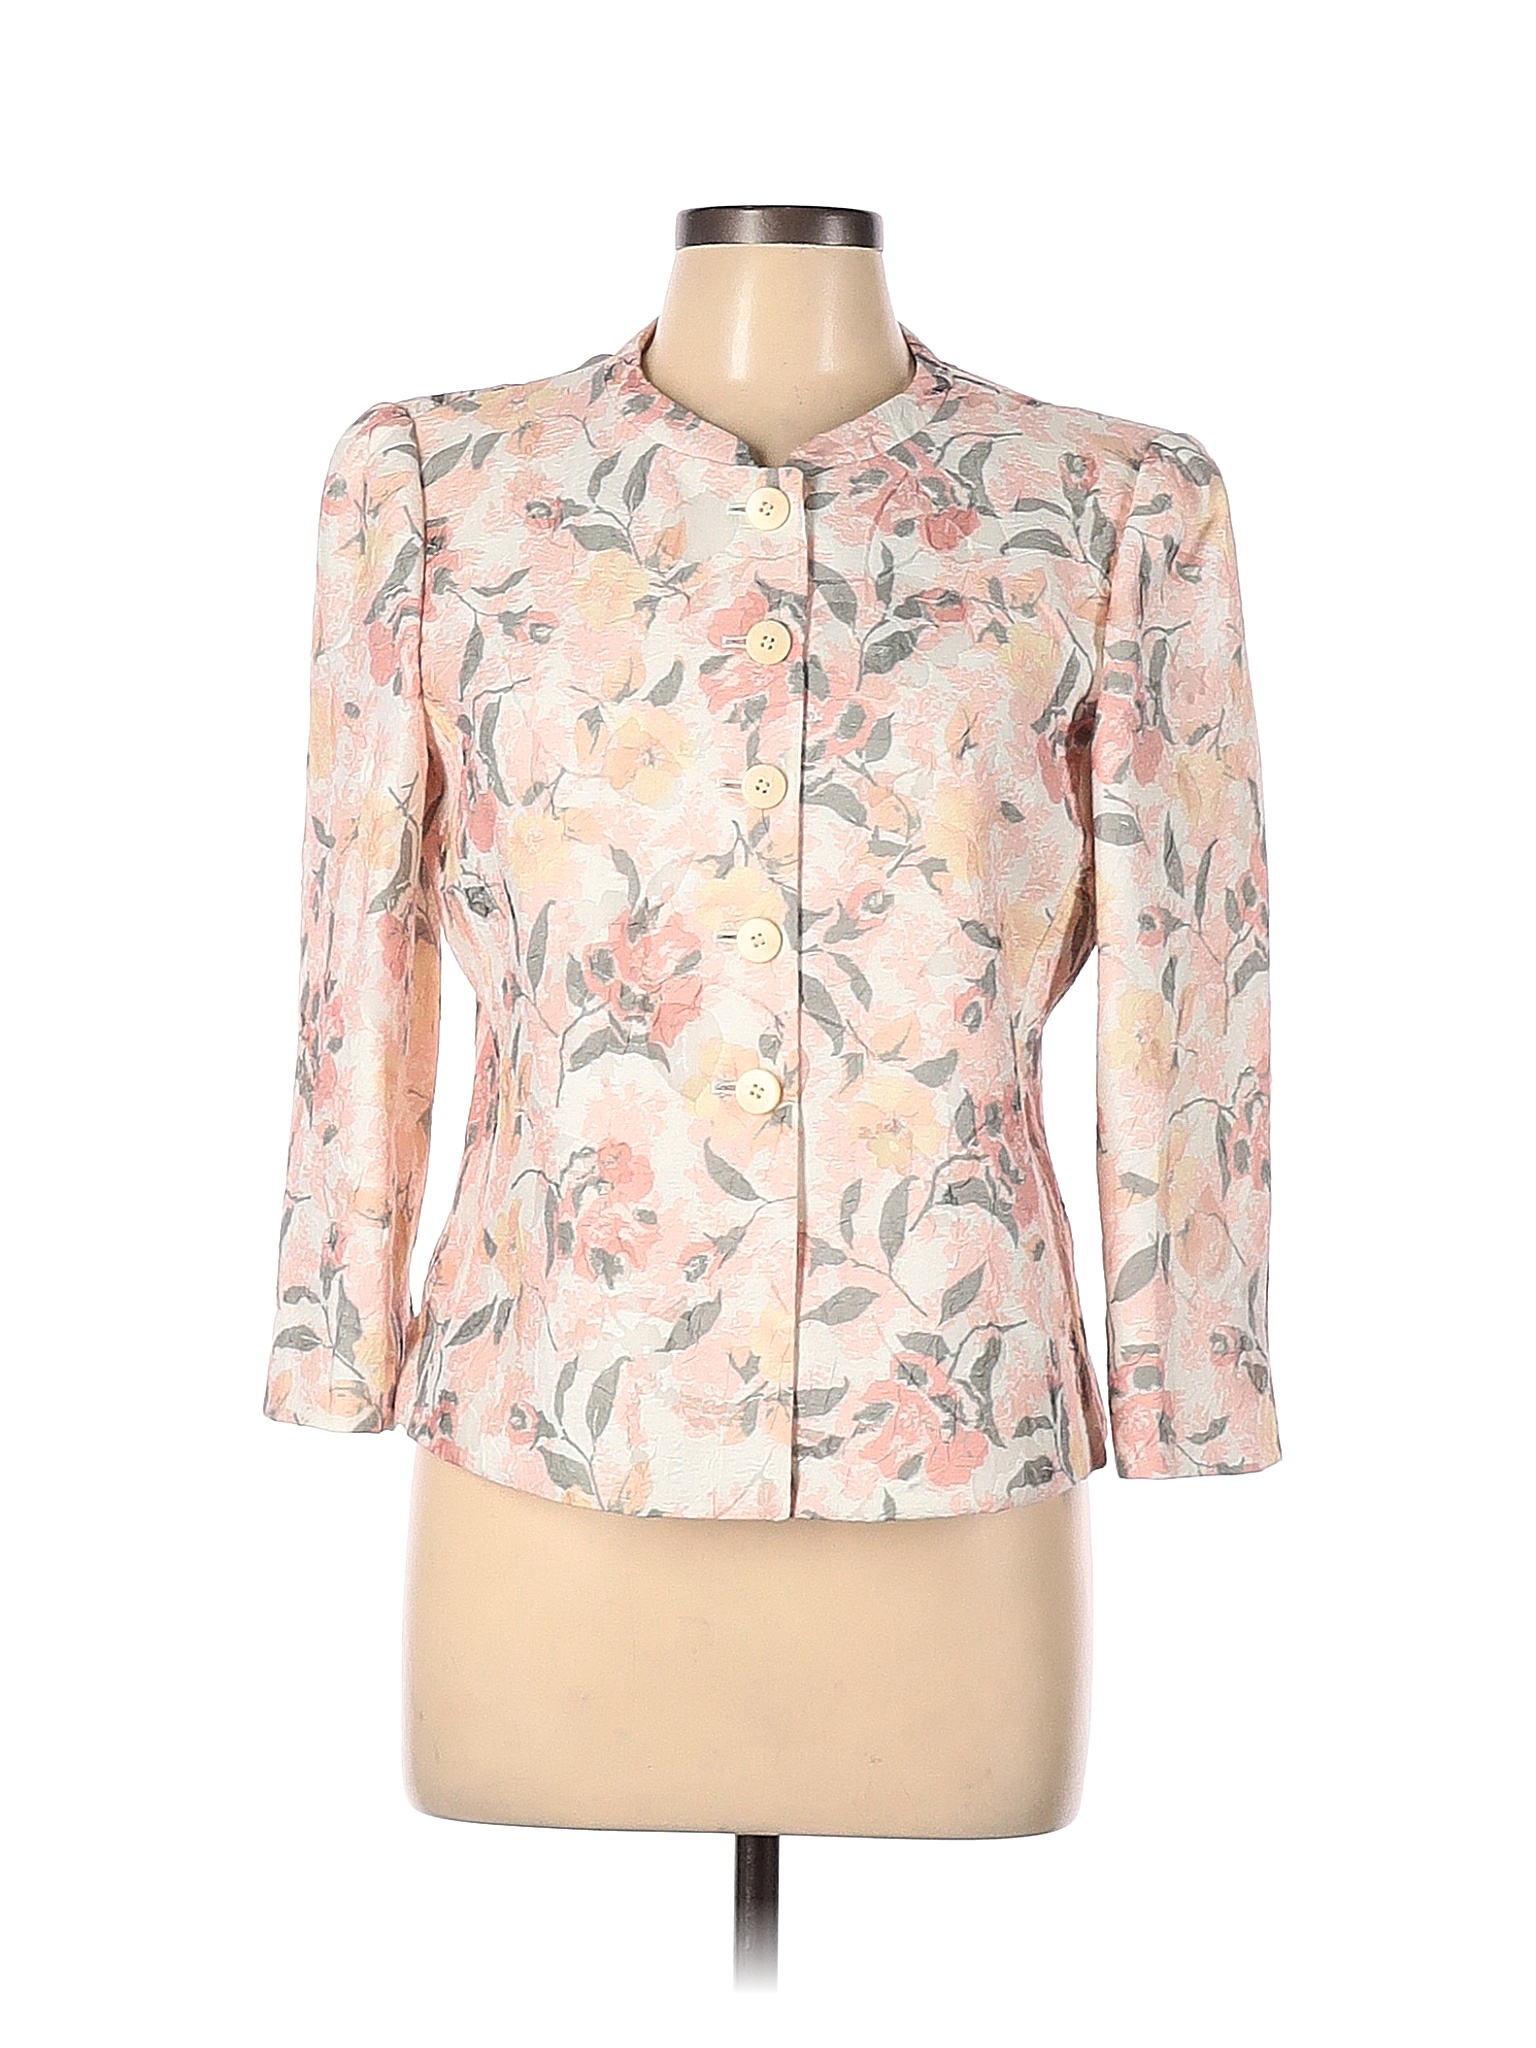 Armani Collezioni Floral Pink Jacket Size 10 - 92% off | thredUP